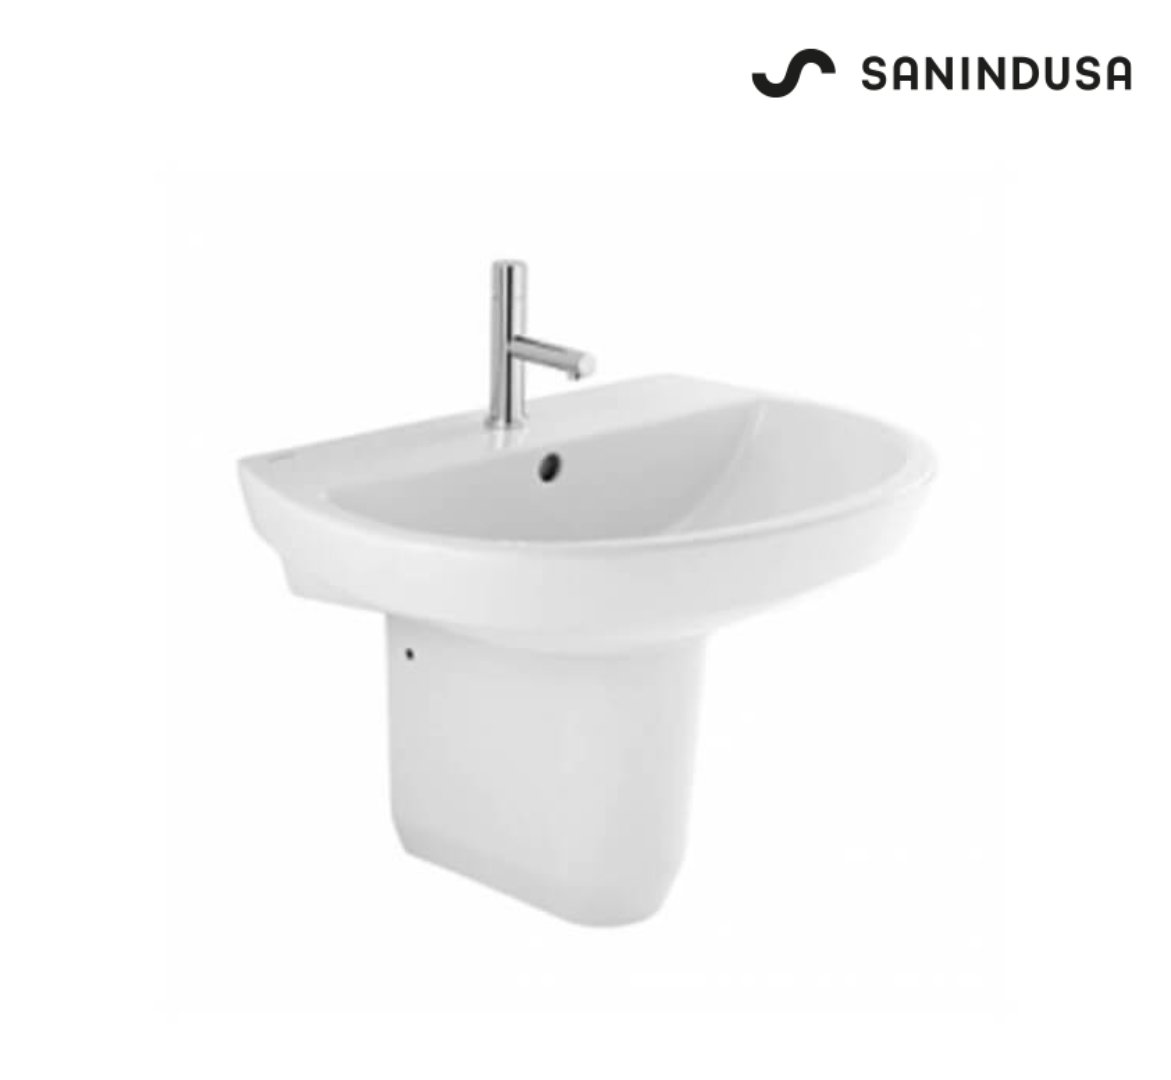 Lavabo Sanindusa con semipedestal blanco mod. Easy 55 cm